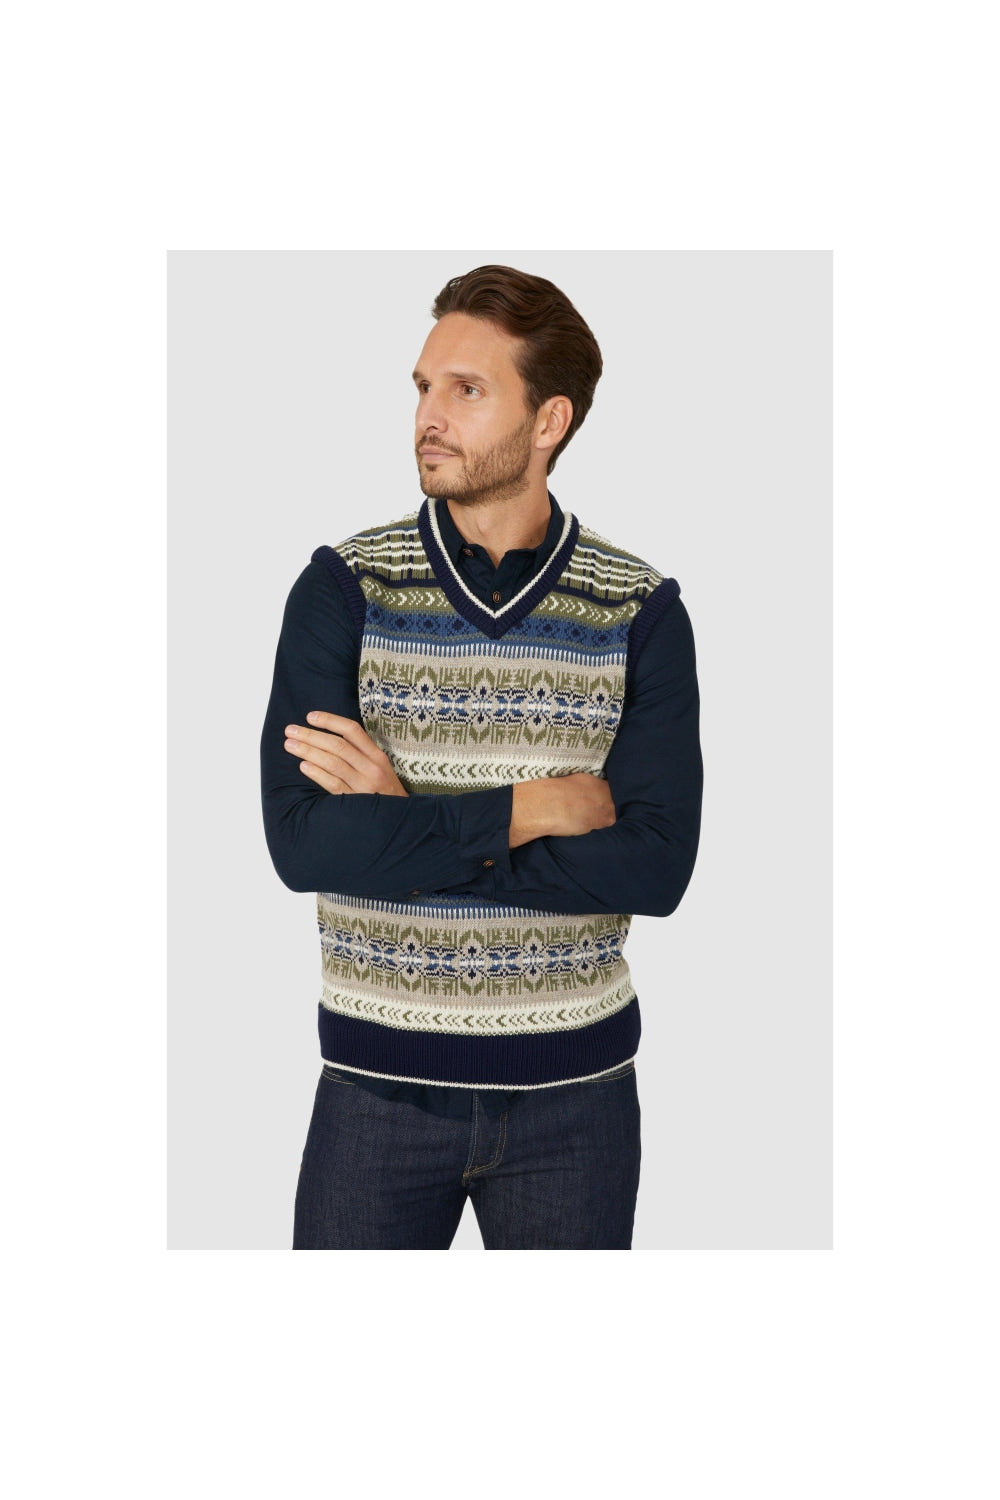 Mens Fair Isle Sleeveless Sweater - Khaki